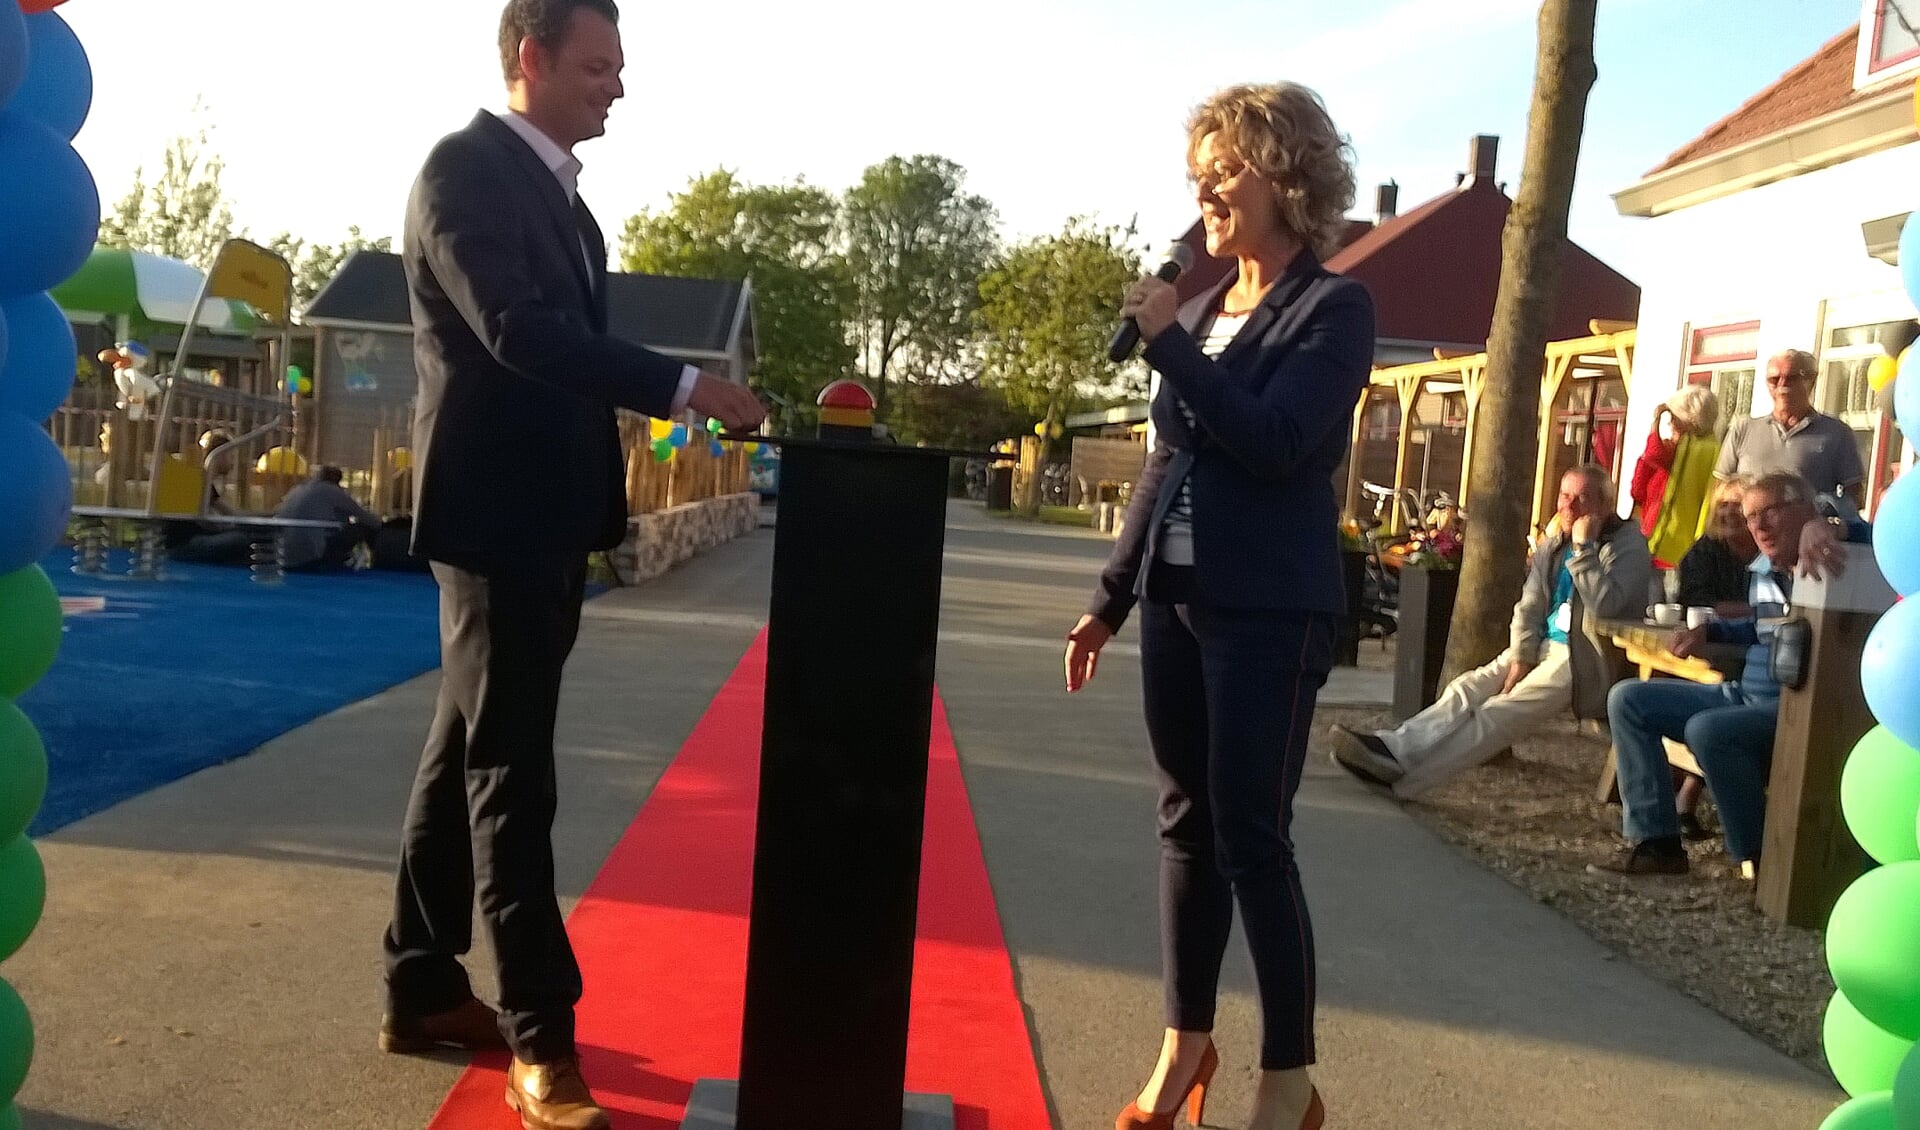 Burgemeester Grootenboer en parkmanager Hoogwerf stellen het spetterbad in bedrijf.